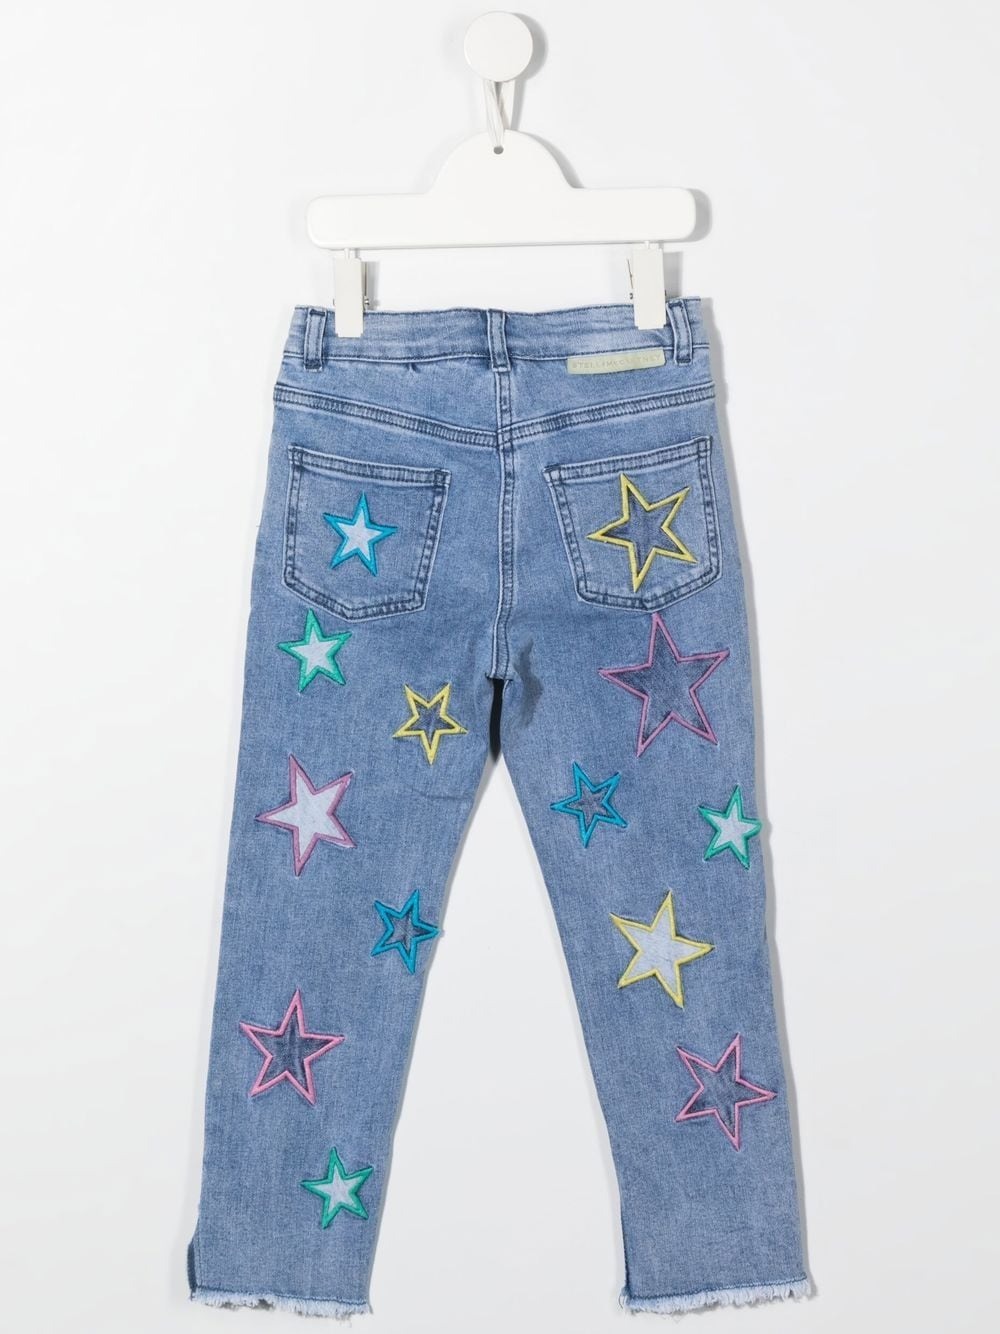 Stella Mccartney star printed jeans, Women's Fashion, Bottoms